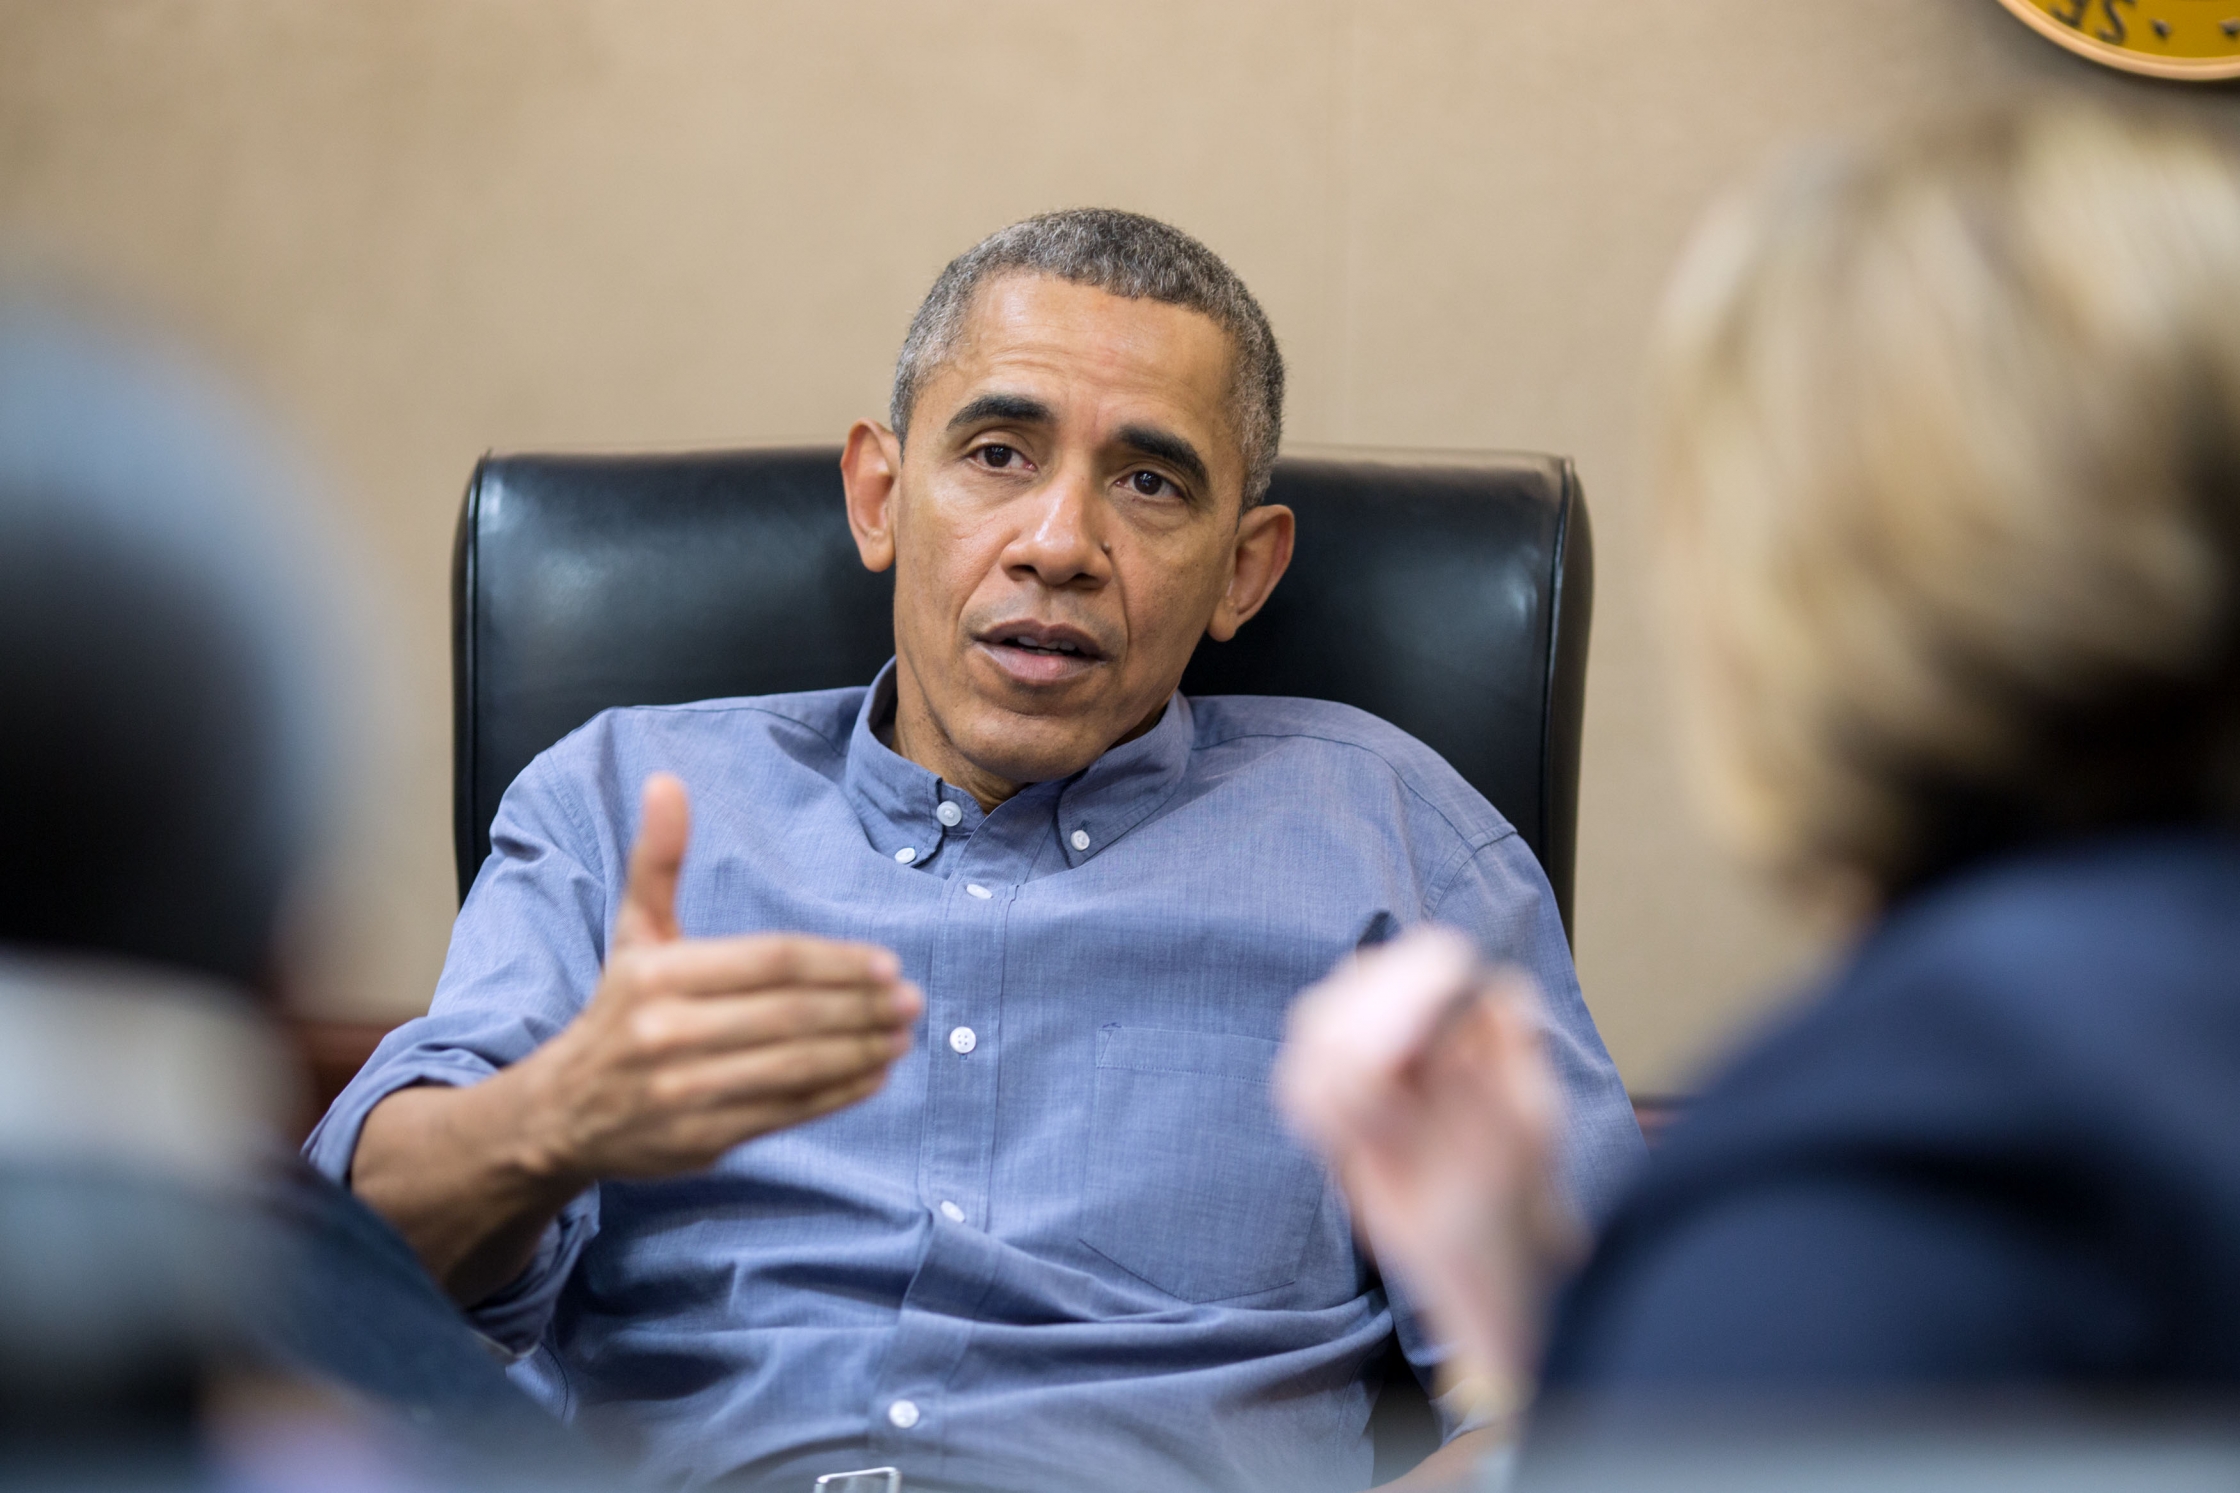 President Obama Update on San Bernardino